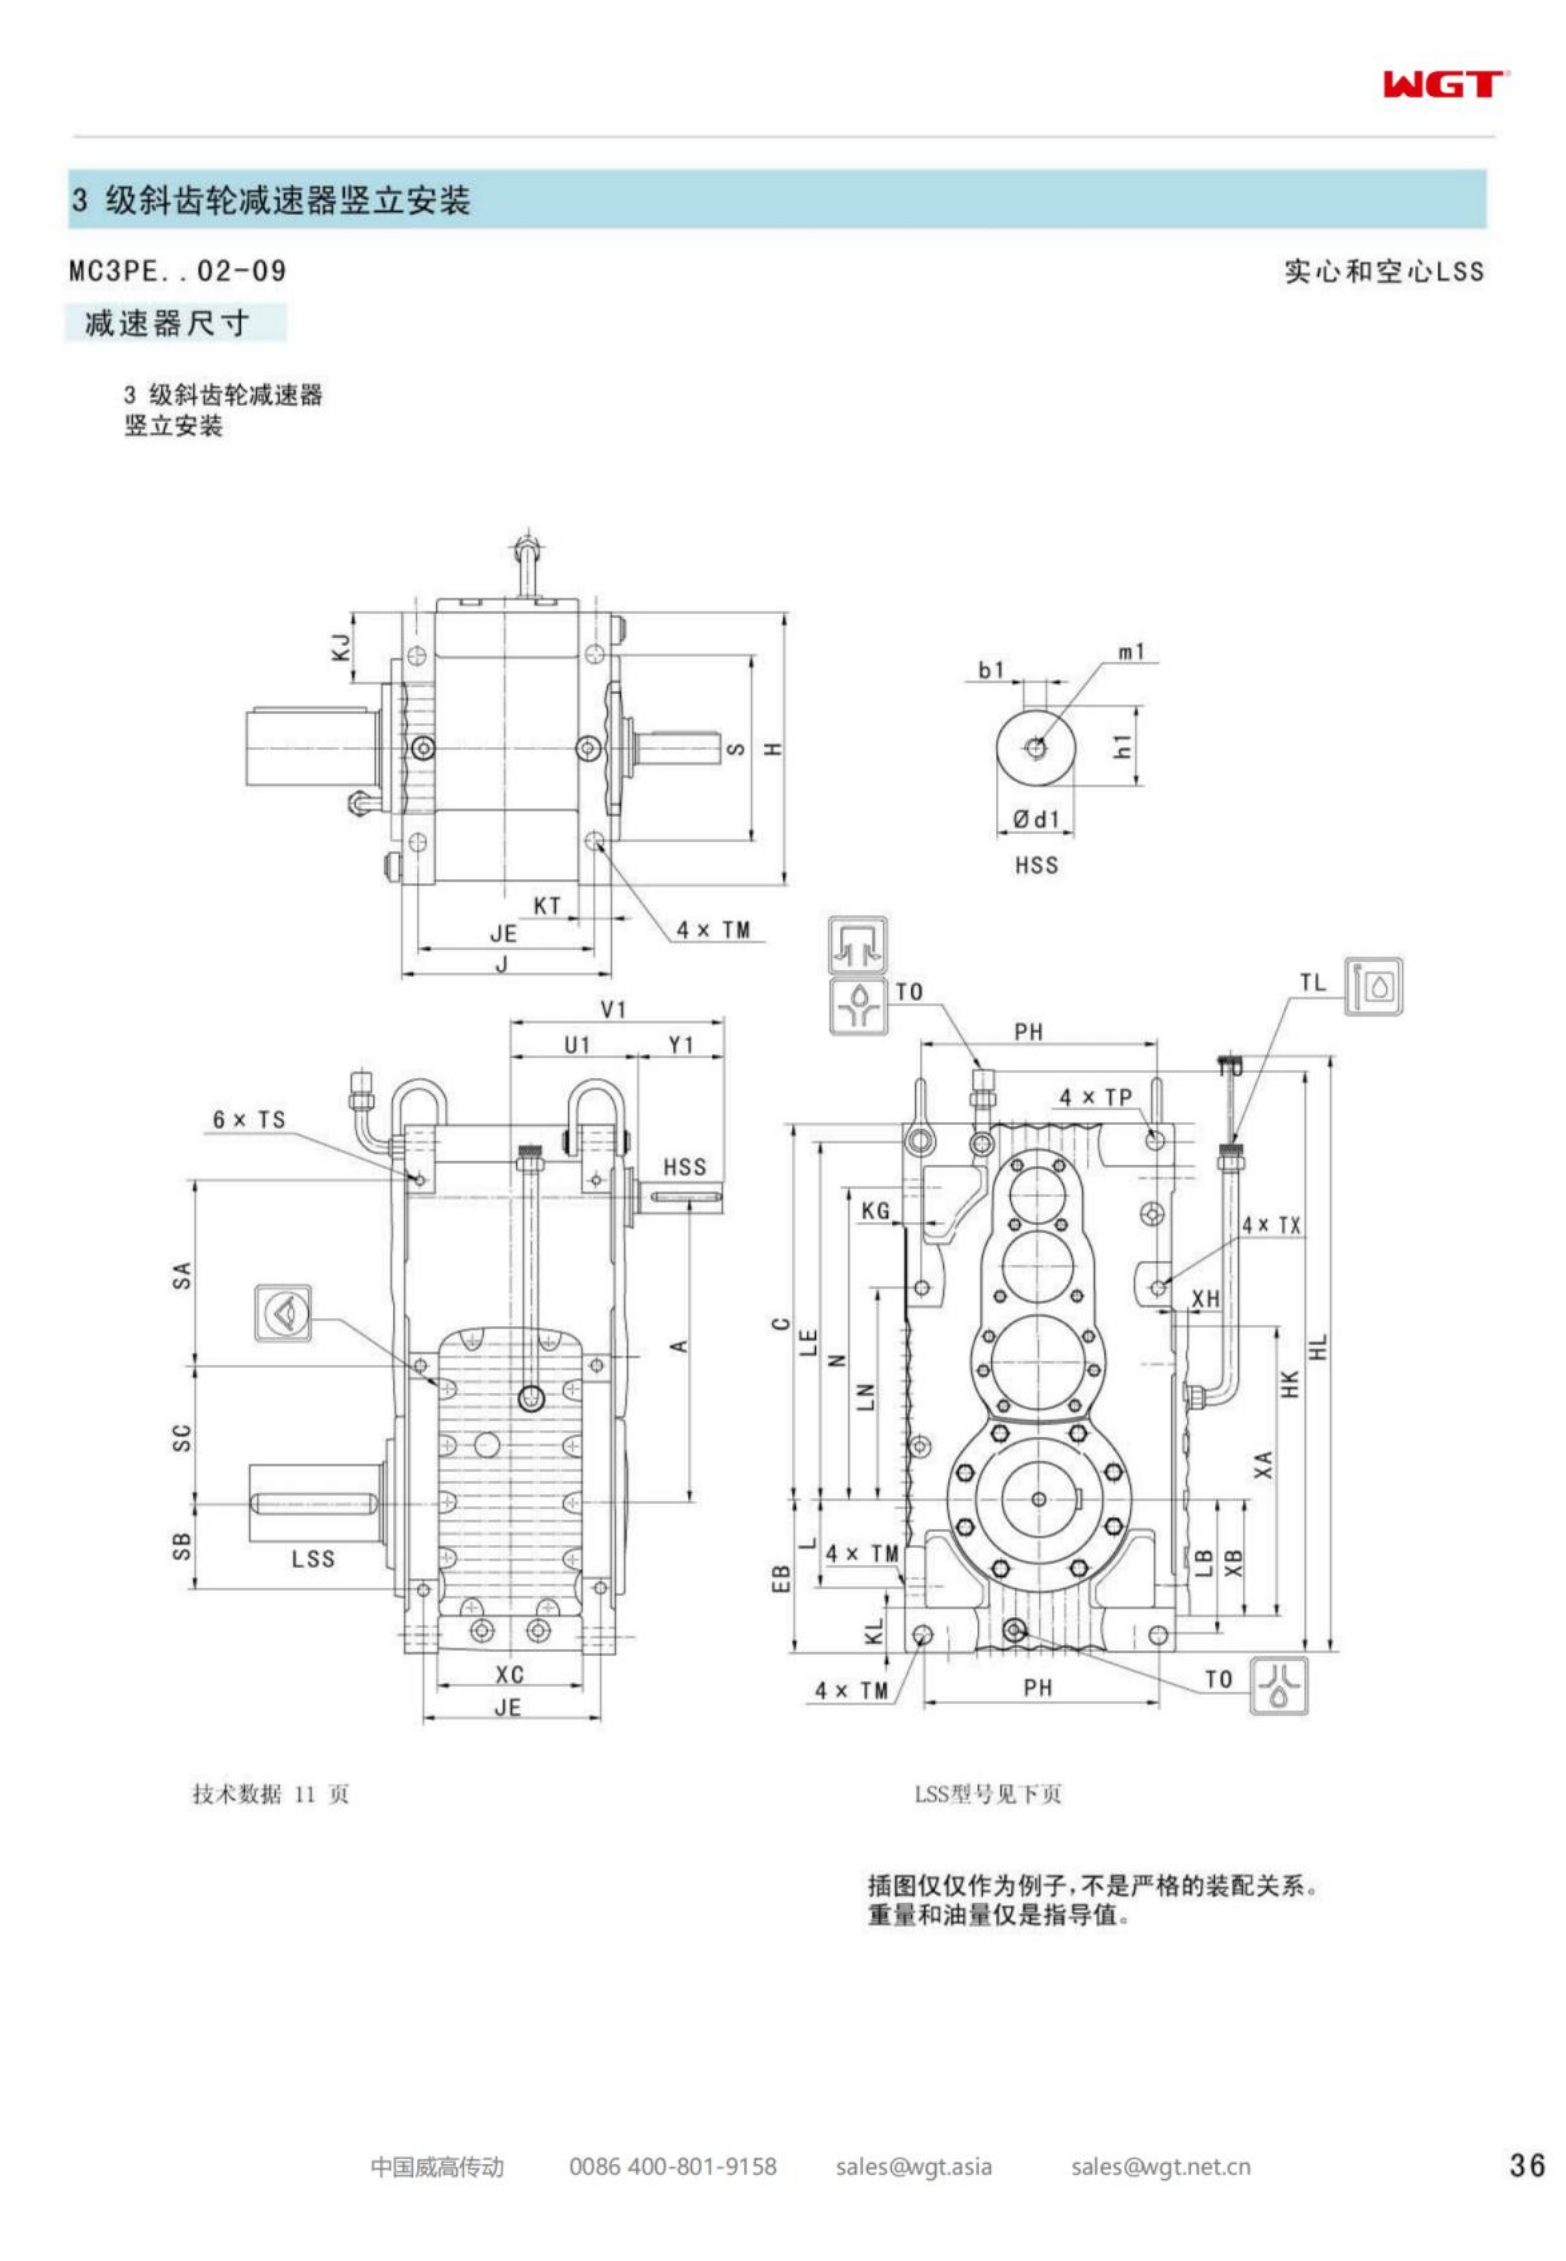 MC3PESF07 replaces _SEW_MC_Series gearbox (patent)